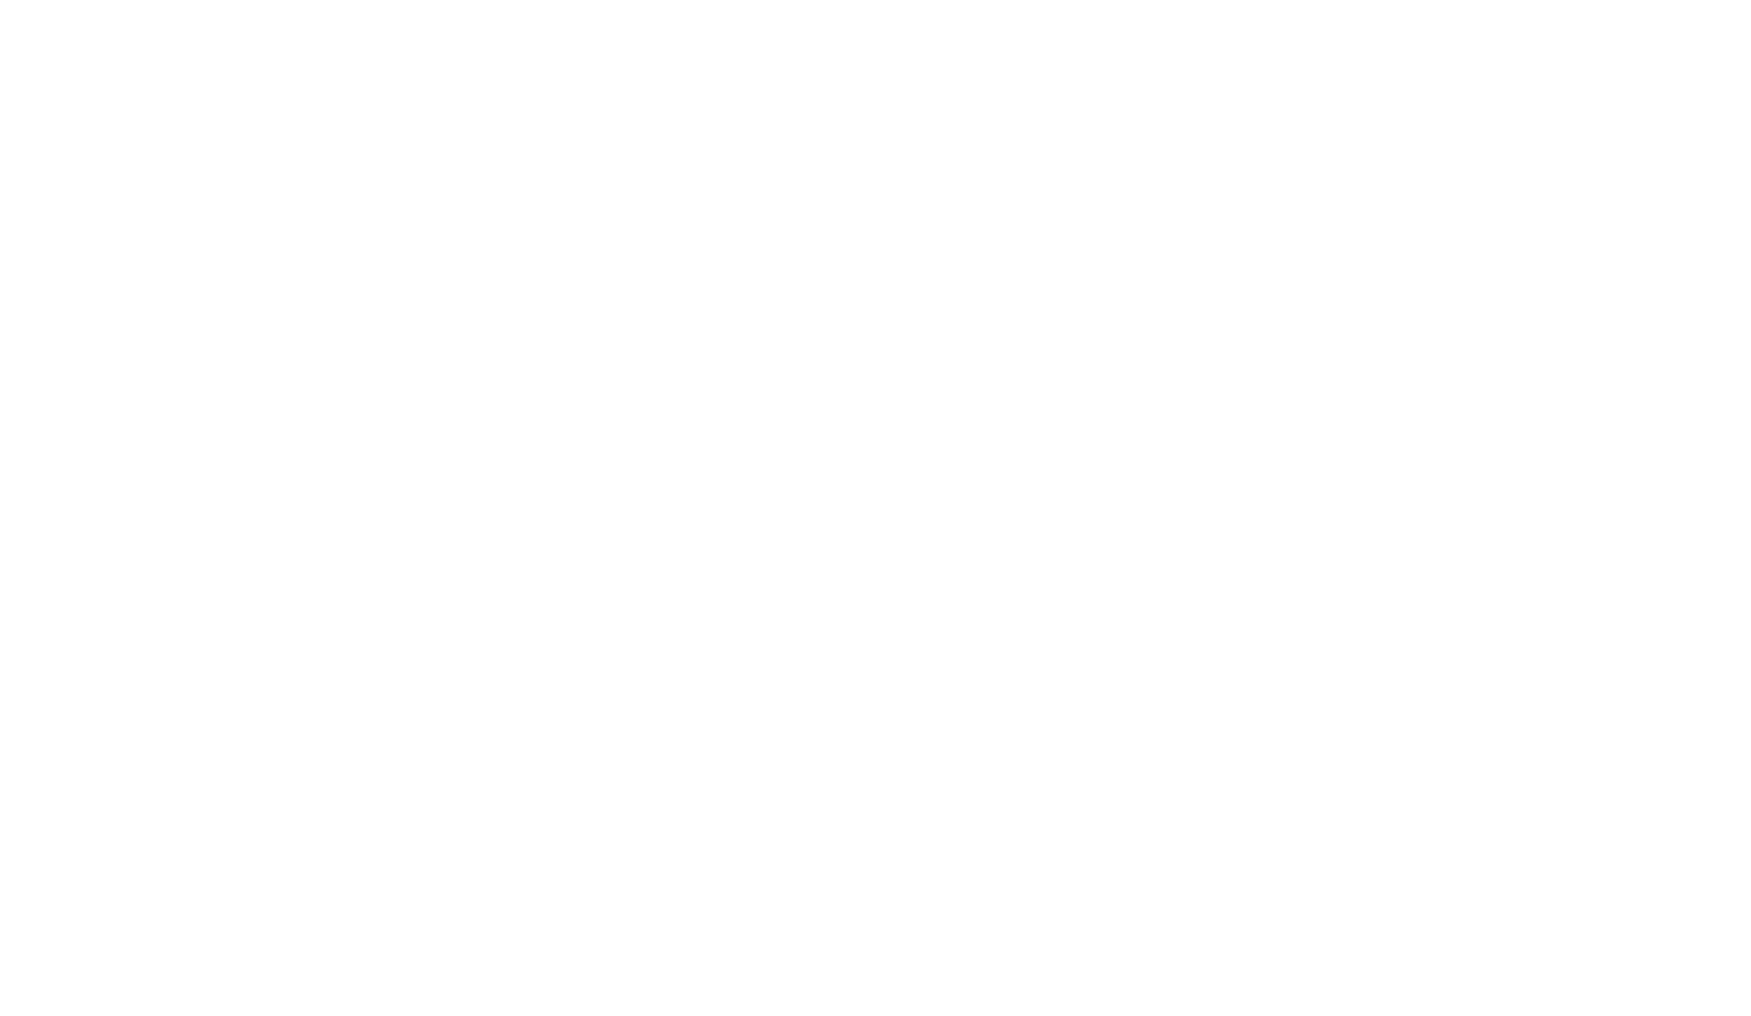 Al Rajhi Group Holding Co. "Under Construction"